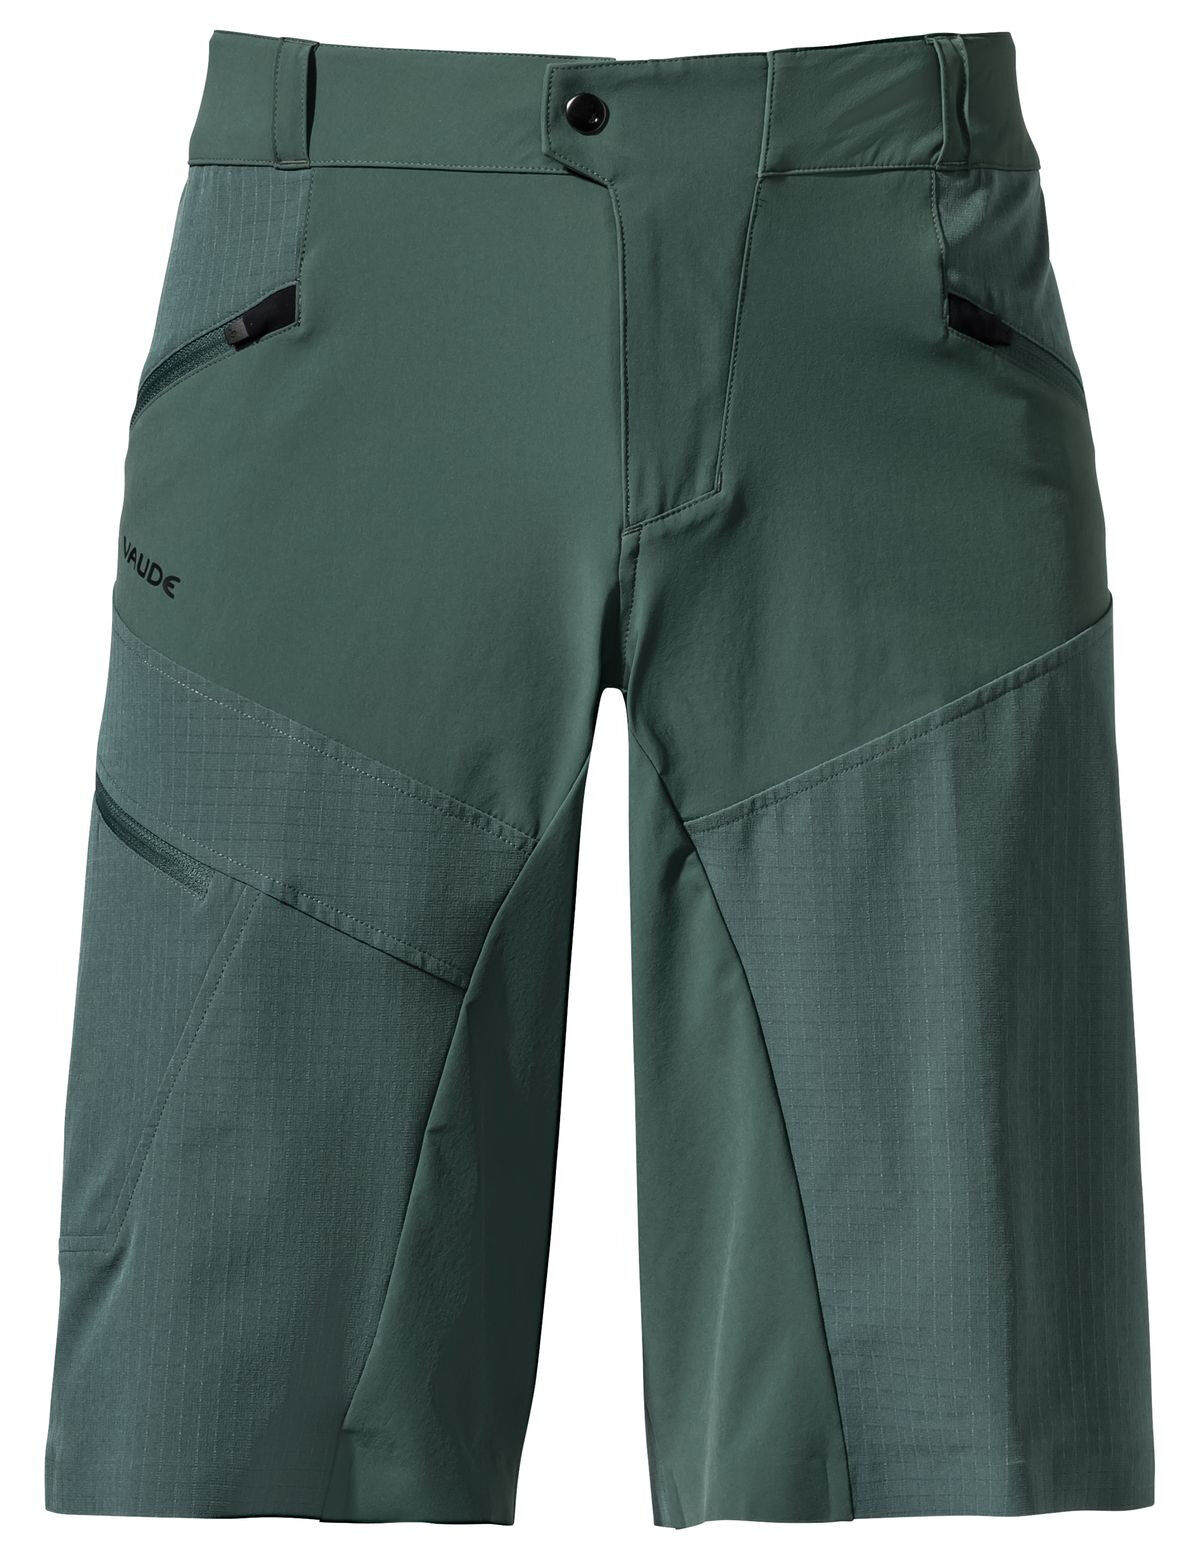 Vaude Virt Shorts - MTB shorts - Men's